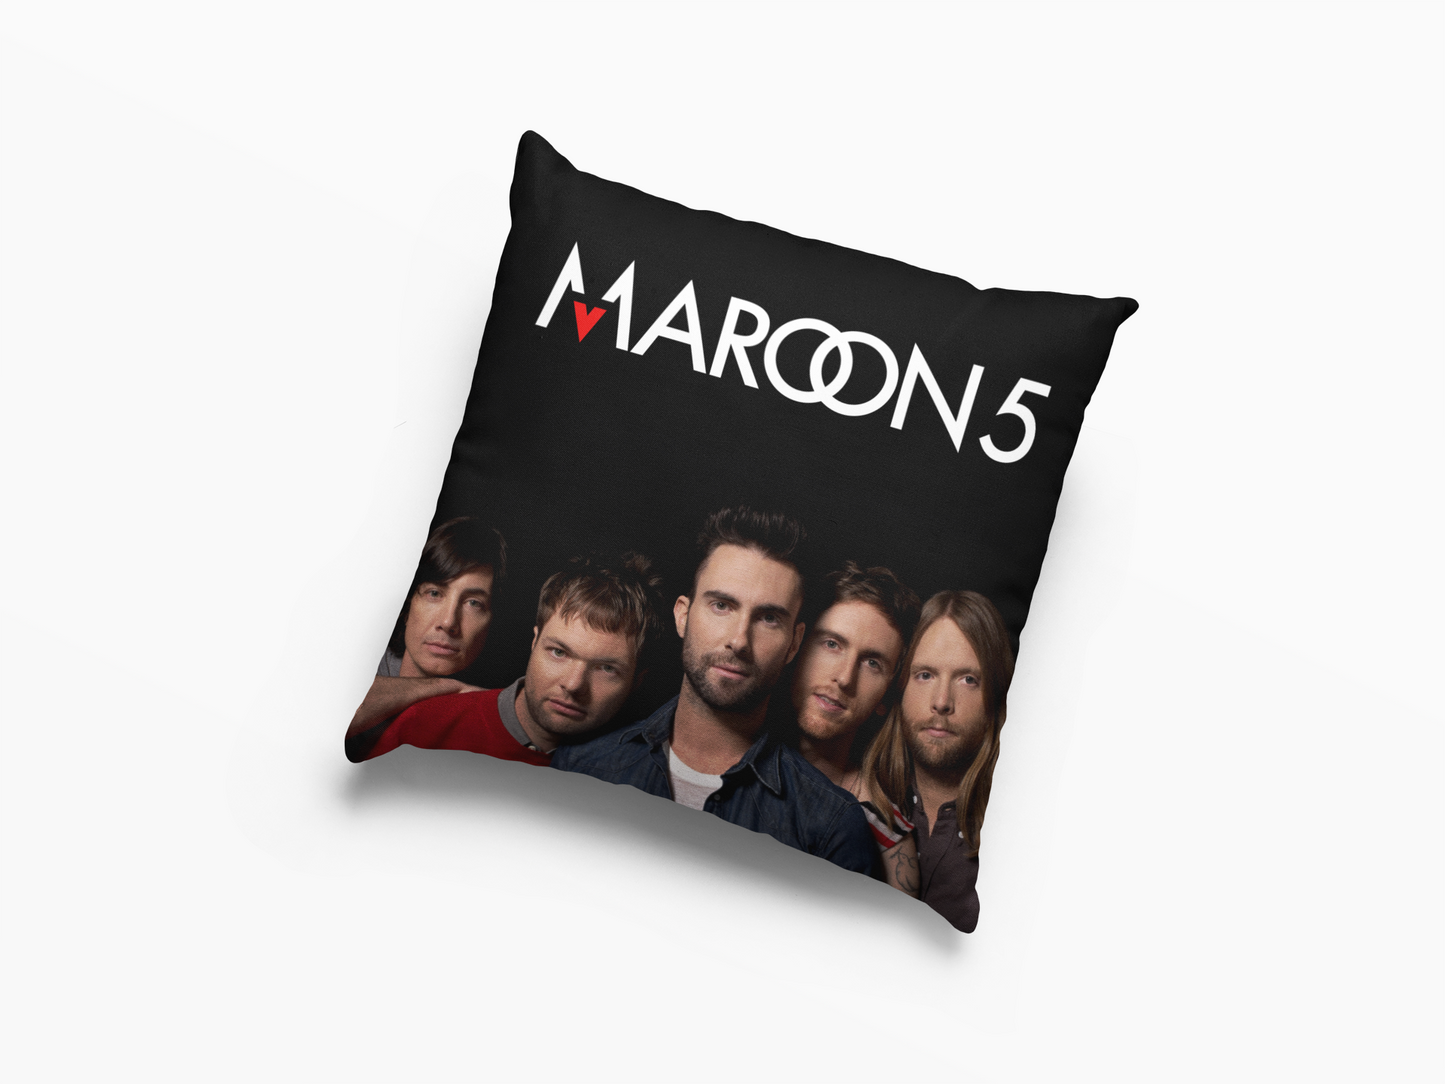 Maroon 5 Band Cushion Case / Pillow Case